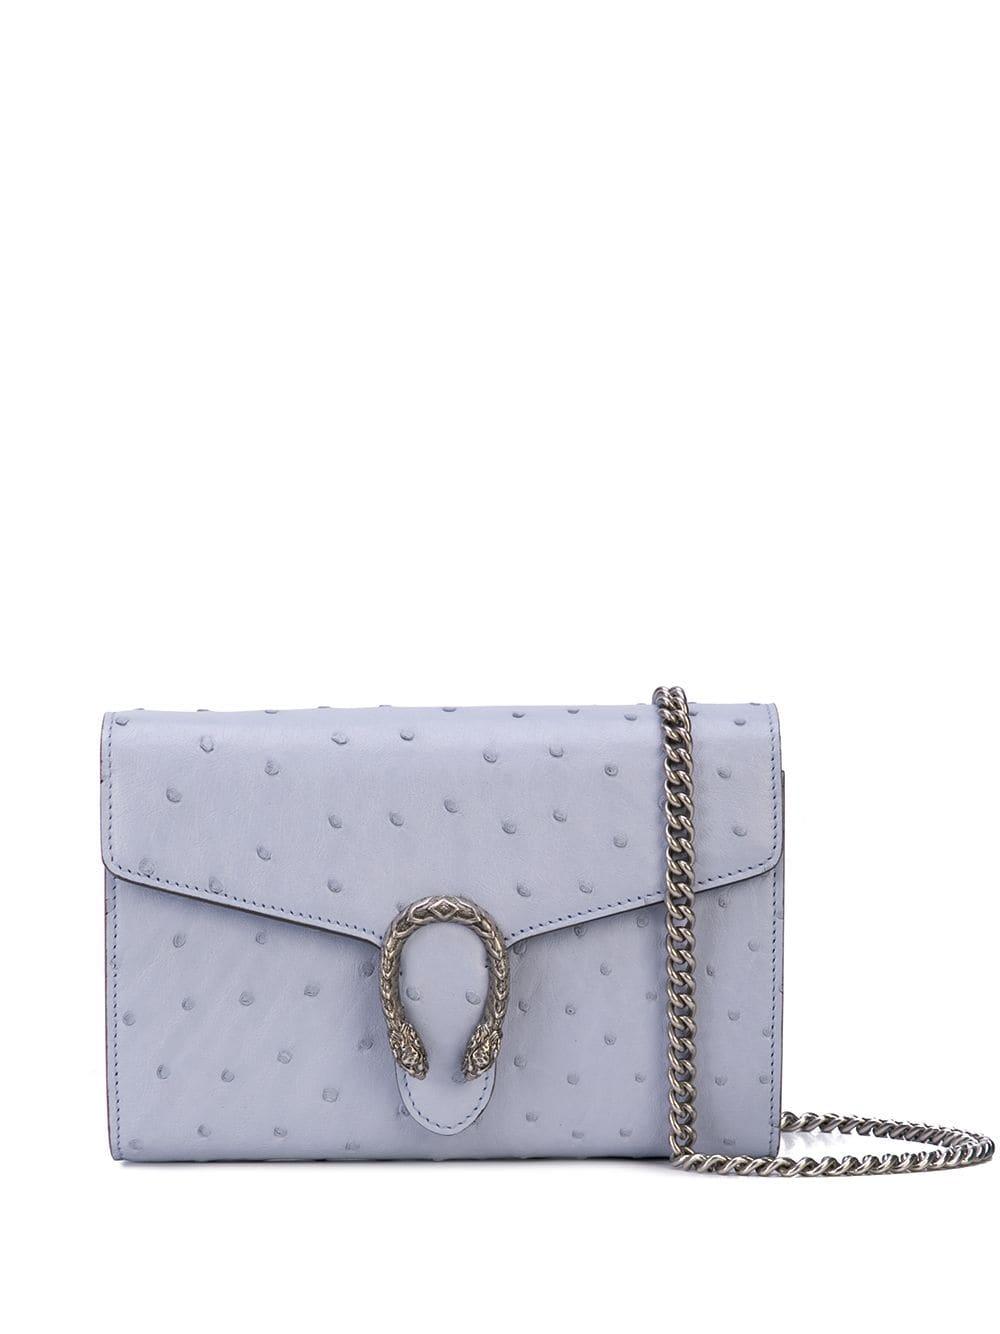 Gucci Mini Dionysus Shoulder Bag in Blue - Lyst